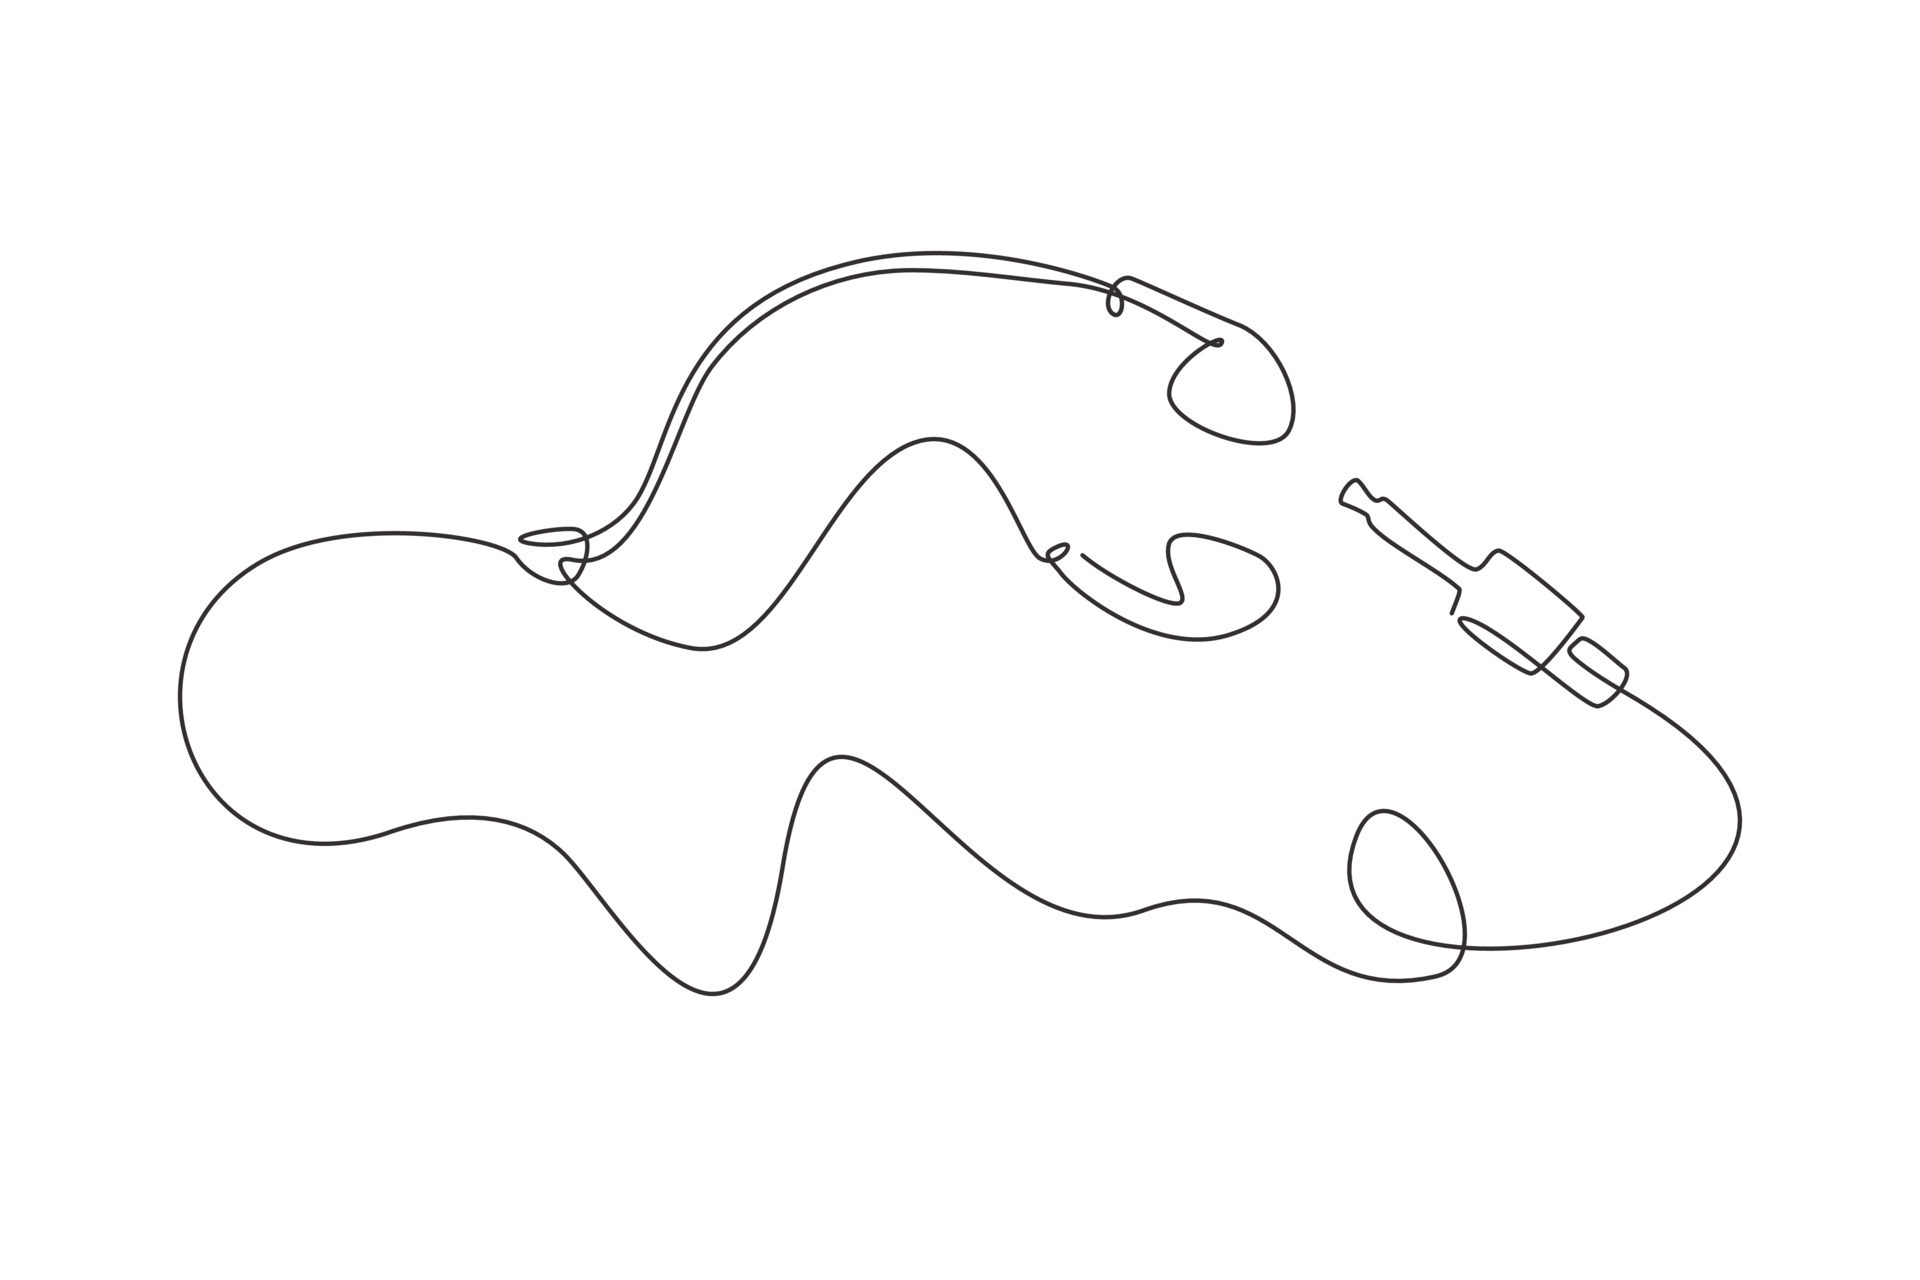 Headphones sketch Vectors  Illustrations for Free Download  Freepik